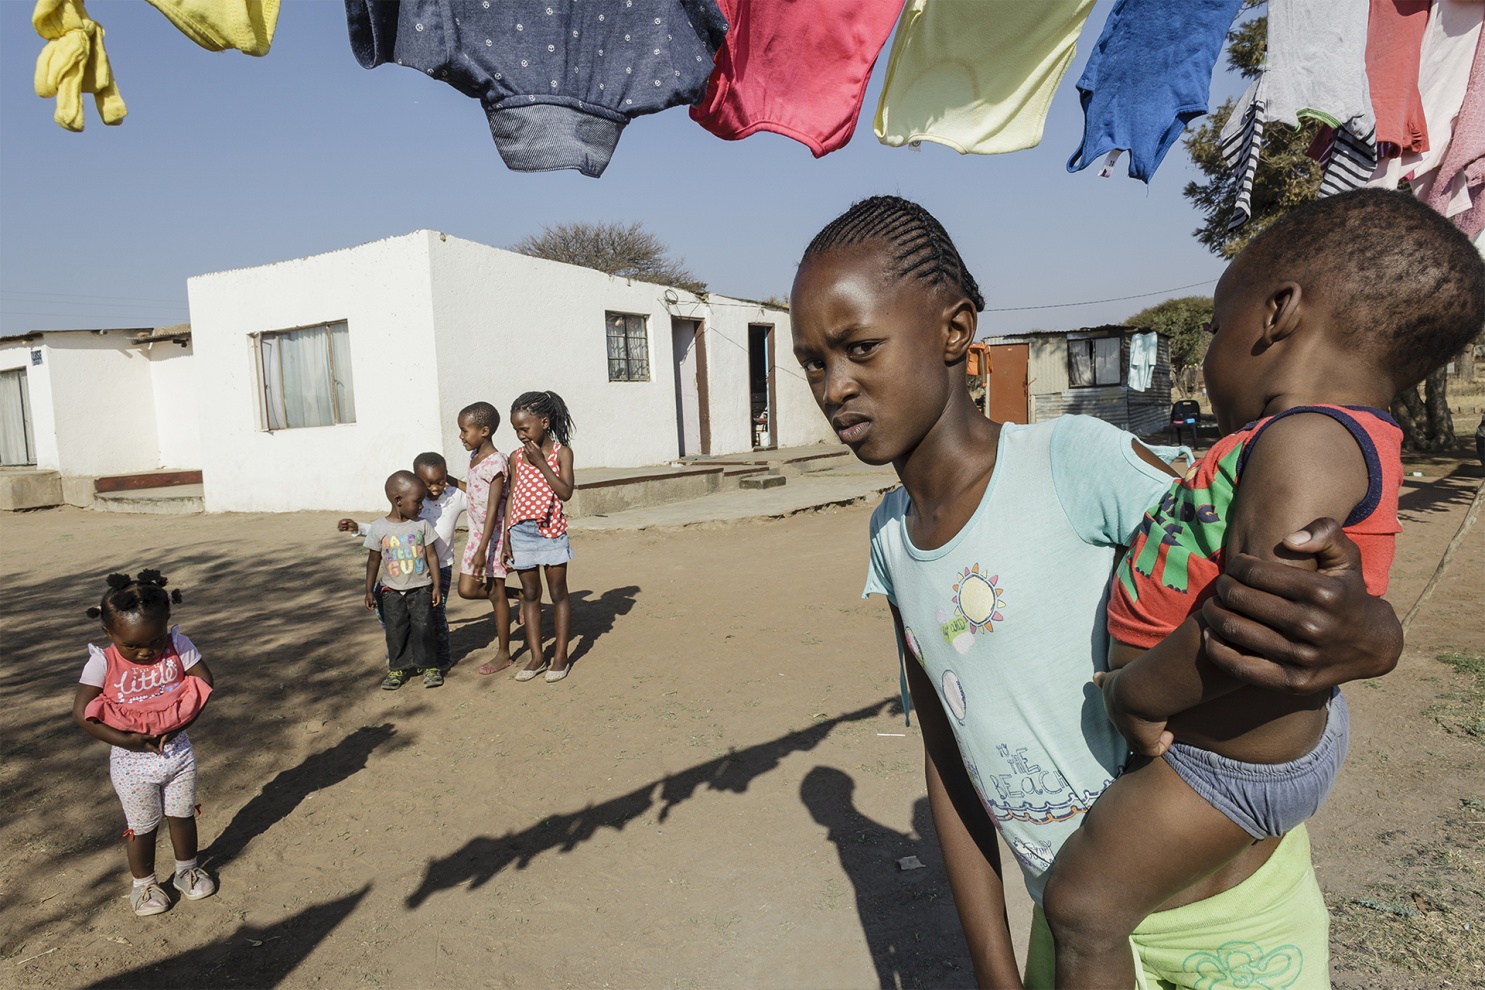 photo Mabhoko Ndebele Village, Gauteng province - South Africa 2013
digital photography
